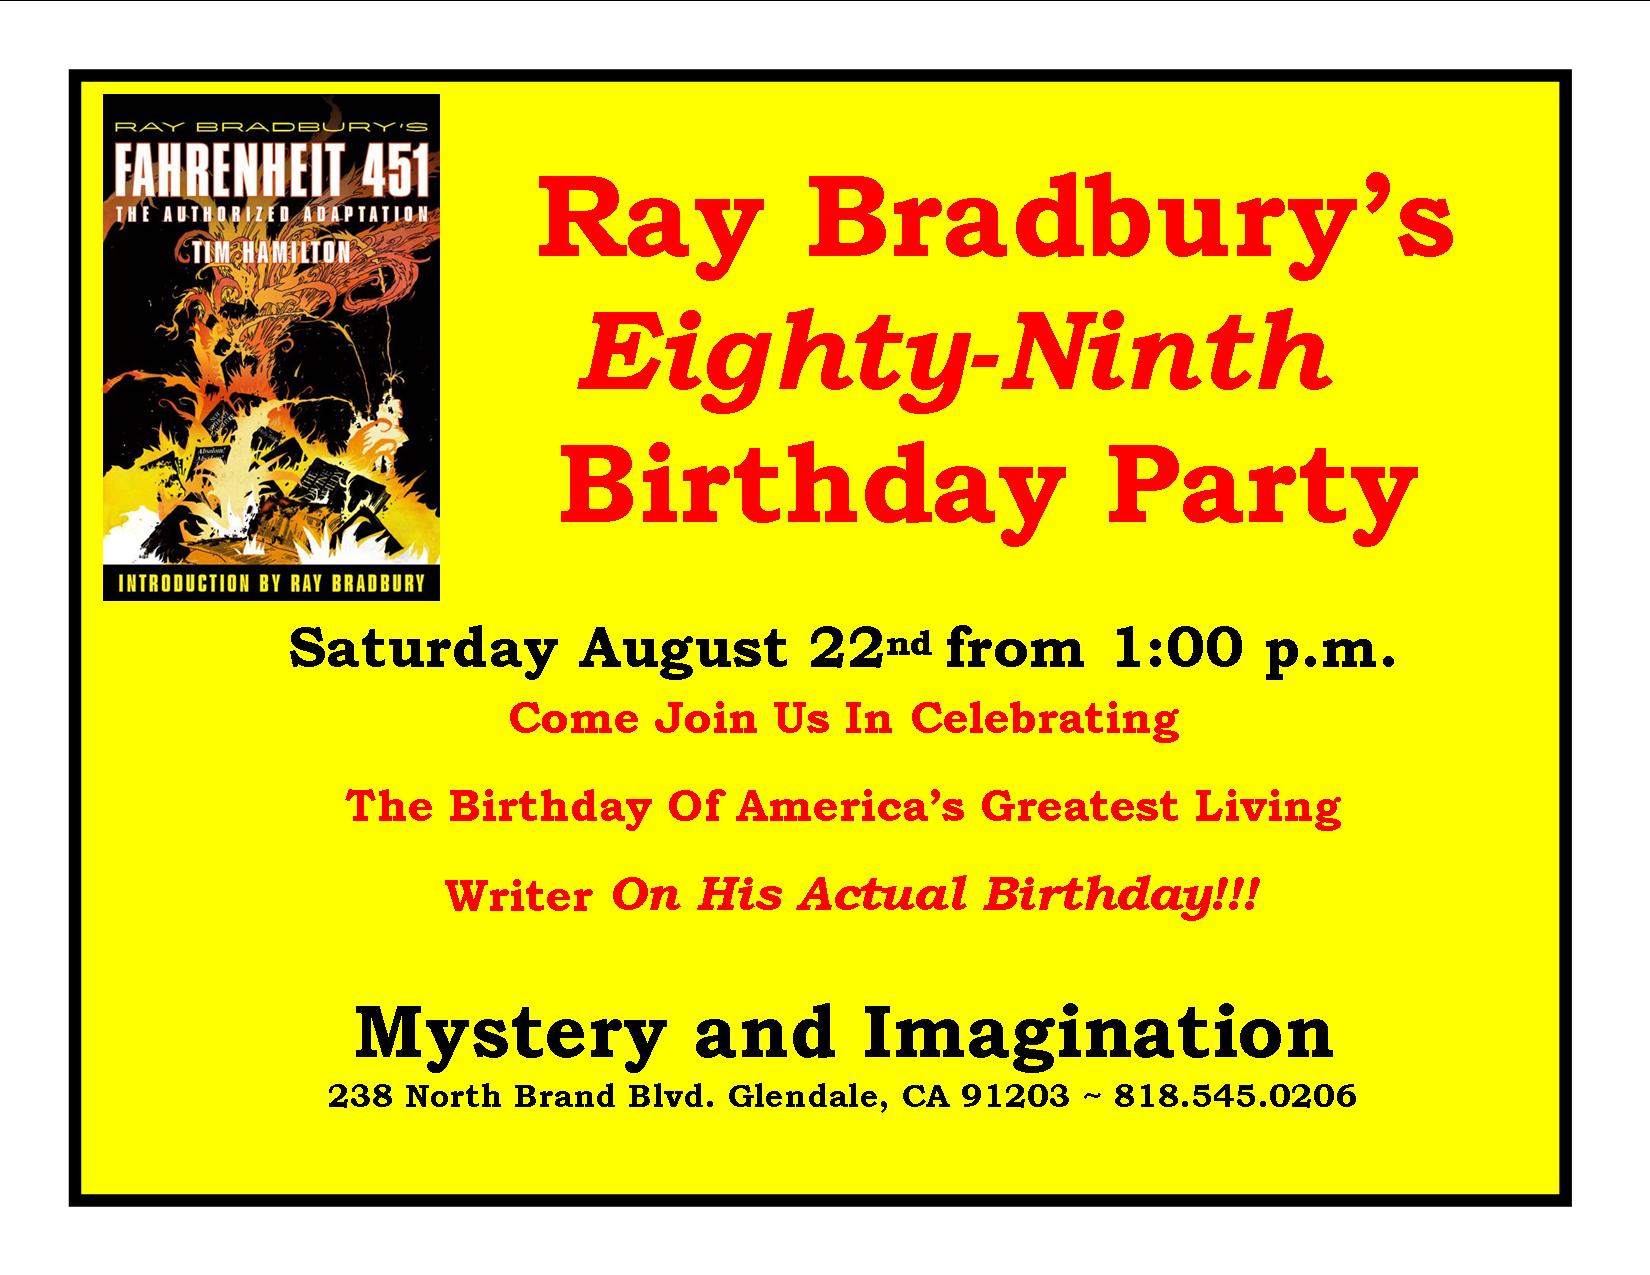 Ray Bradbury's 89th birthday party